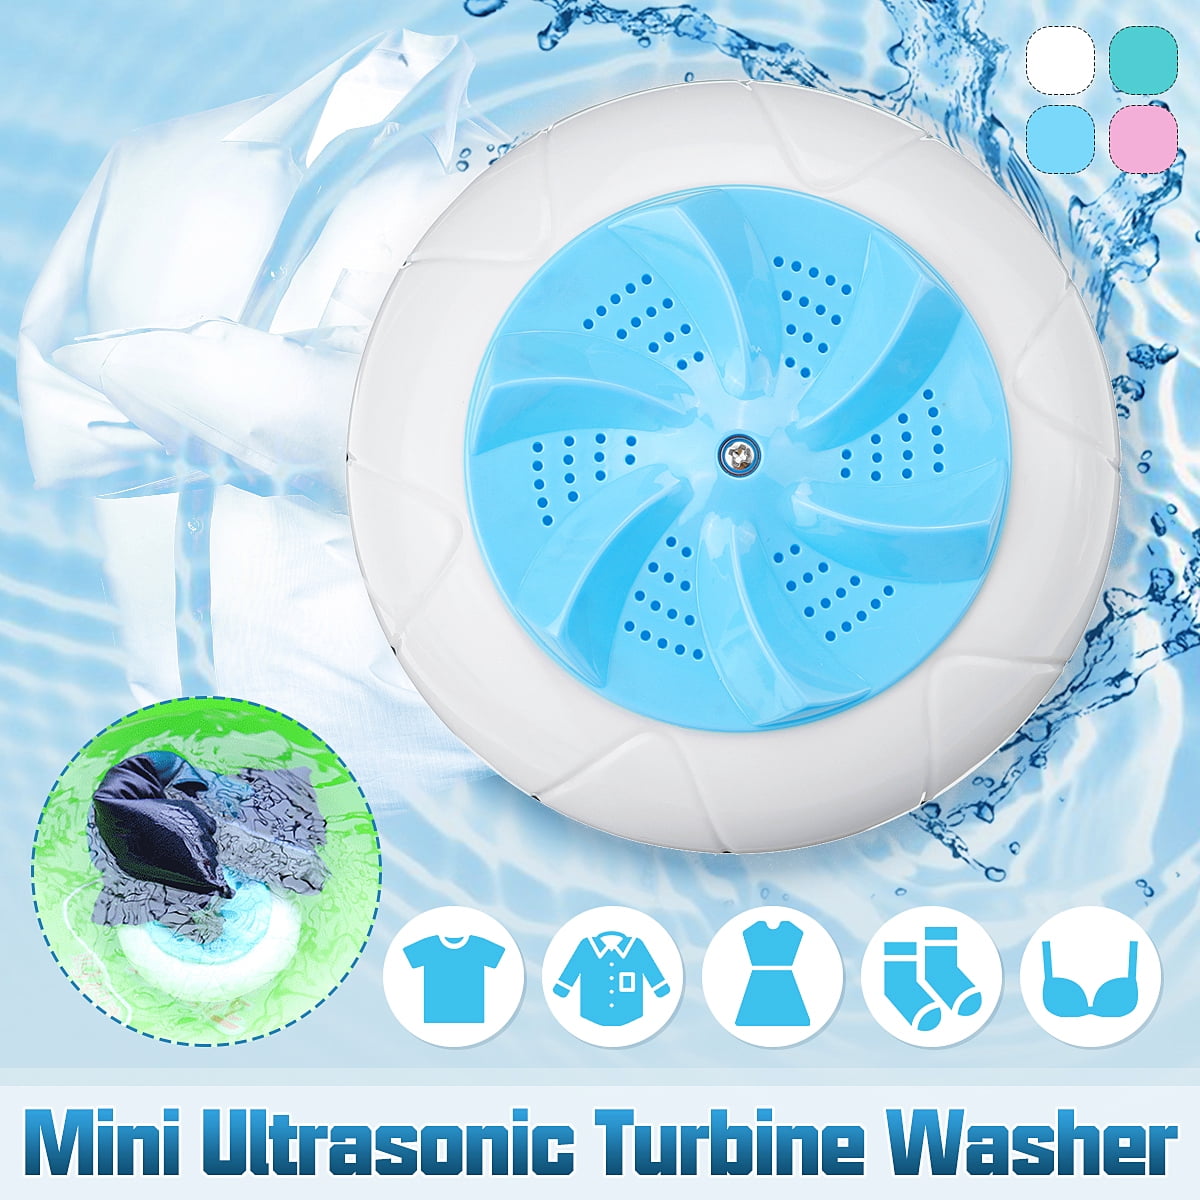 USB Portable Ultrasonic Washing Machine Mini Washer Laundry Turbine Rotating 